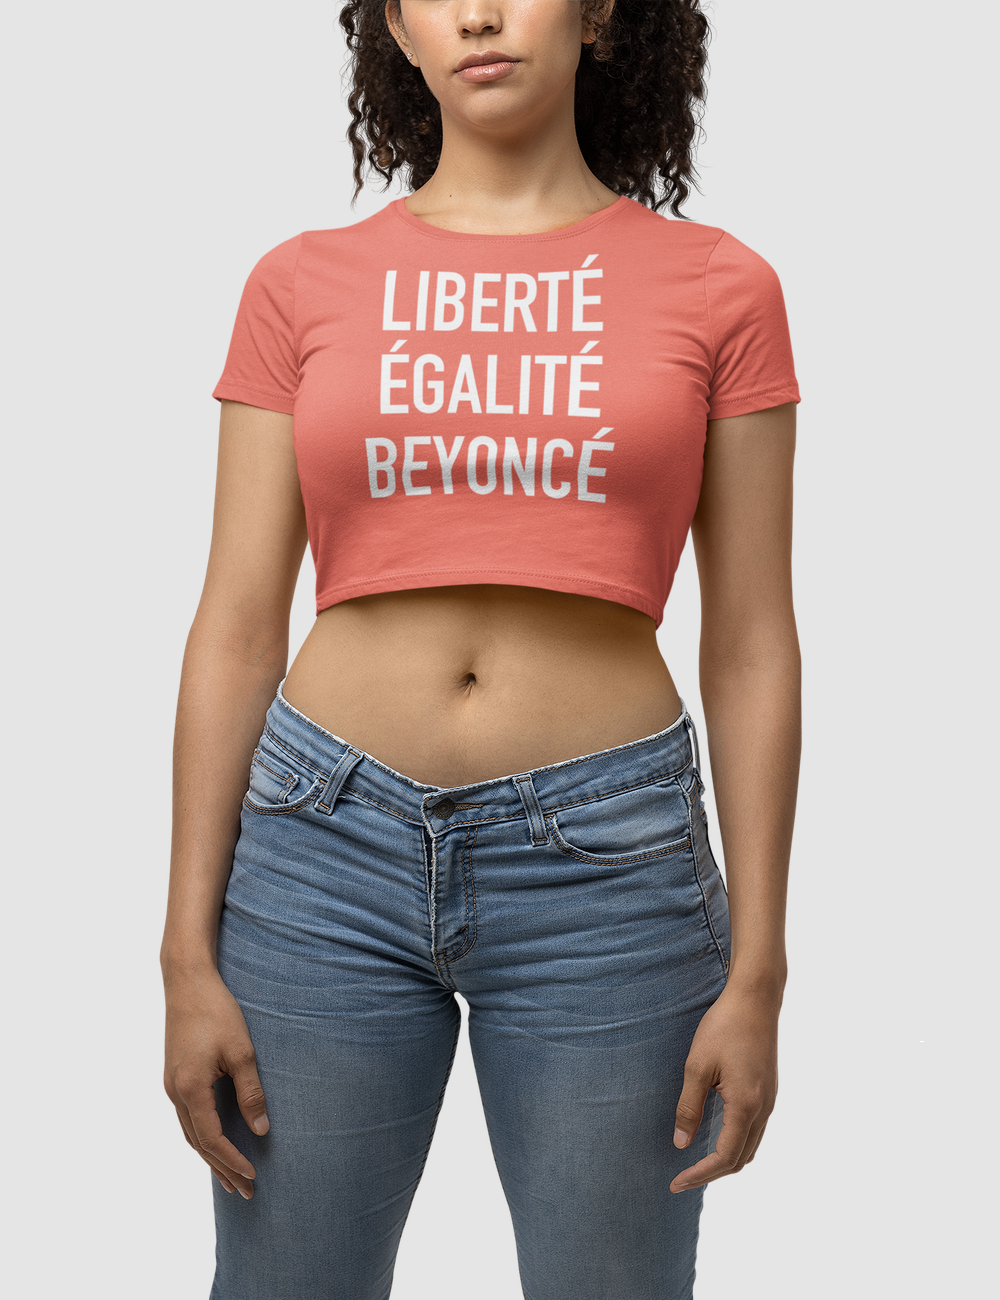 Liberté Égalité Beyoncé Women's Fitted Coral Crop Top T-Shirt - OniTakai